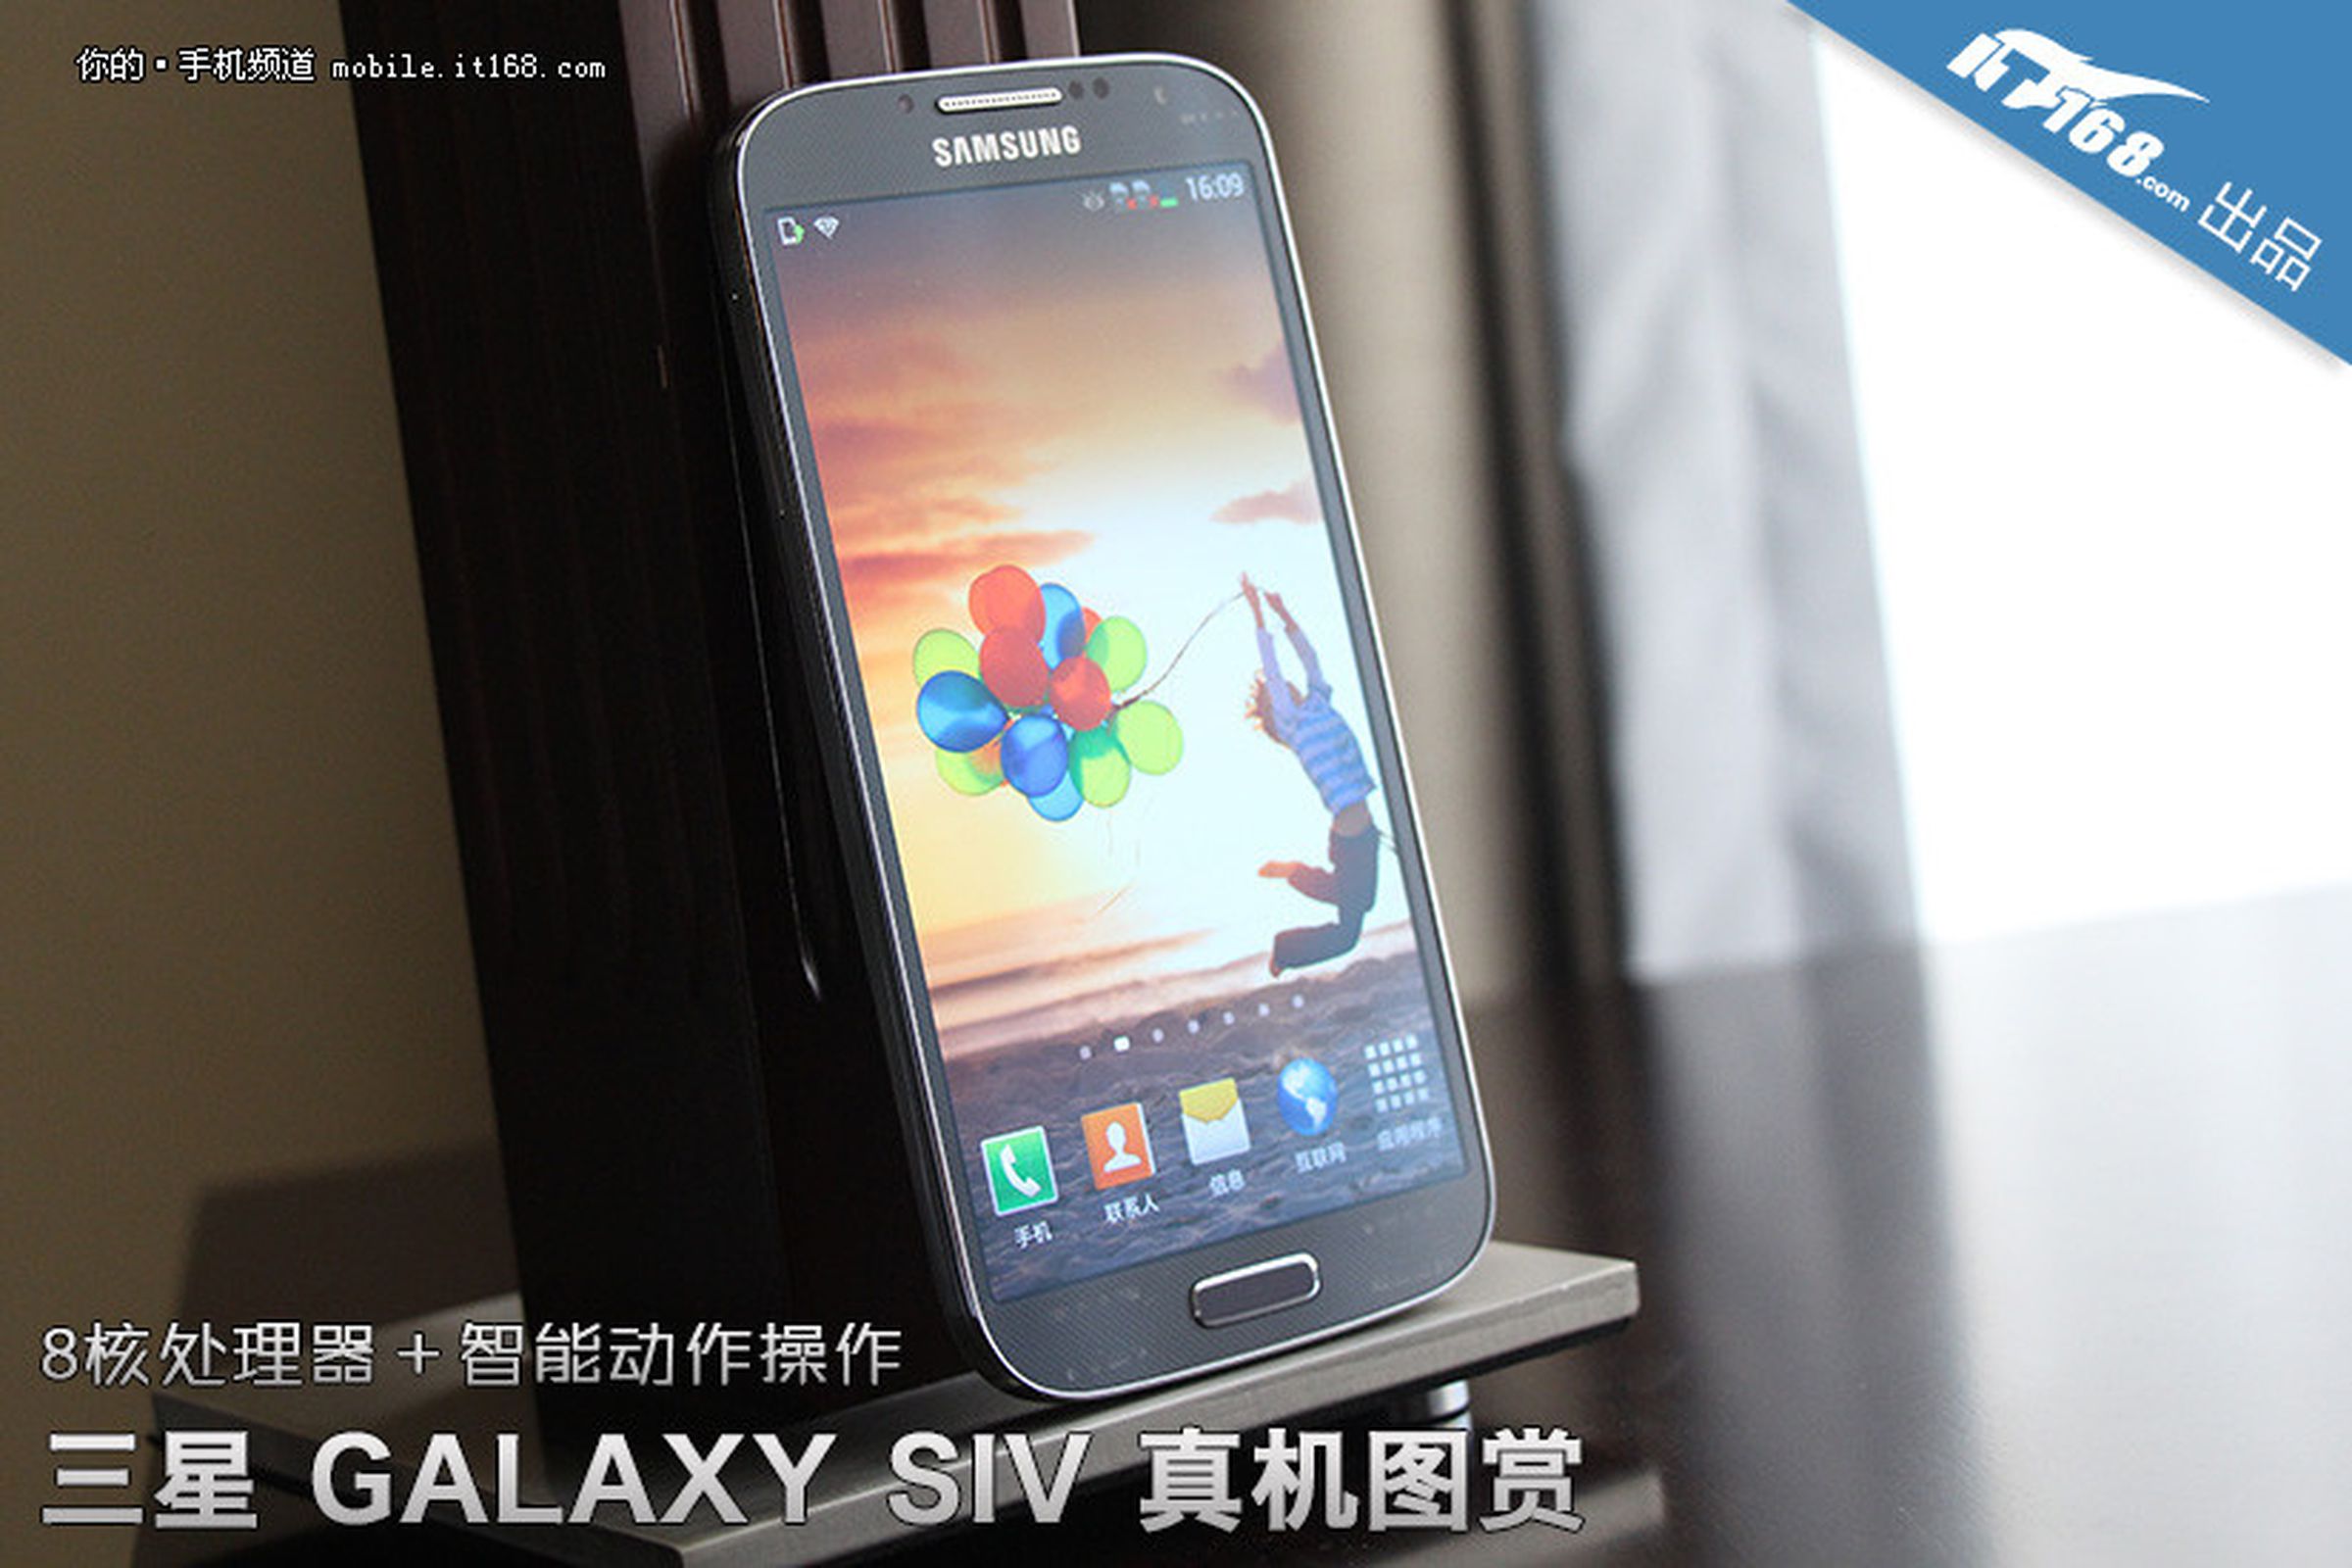 Samsung Galaxy S IV (IT168)